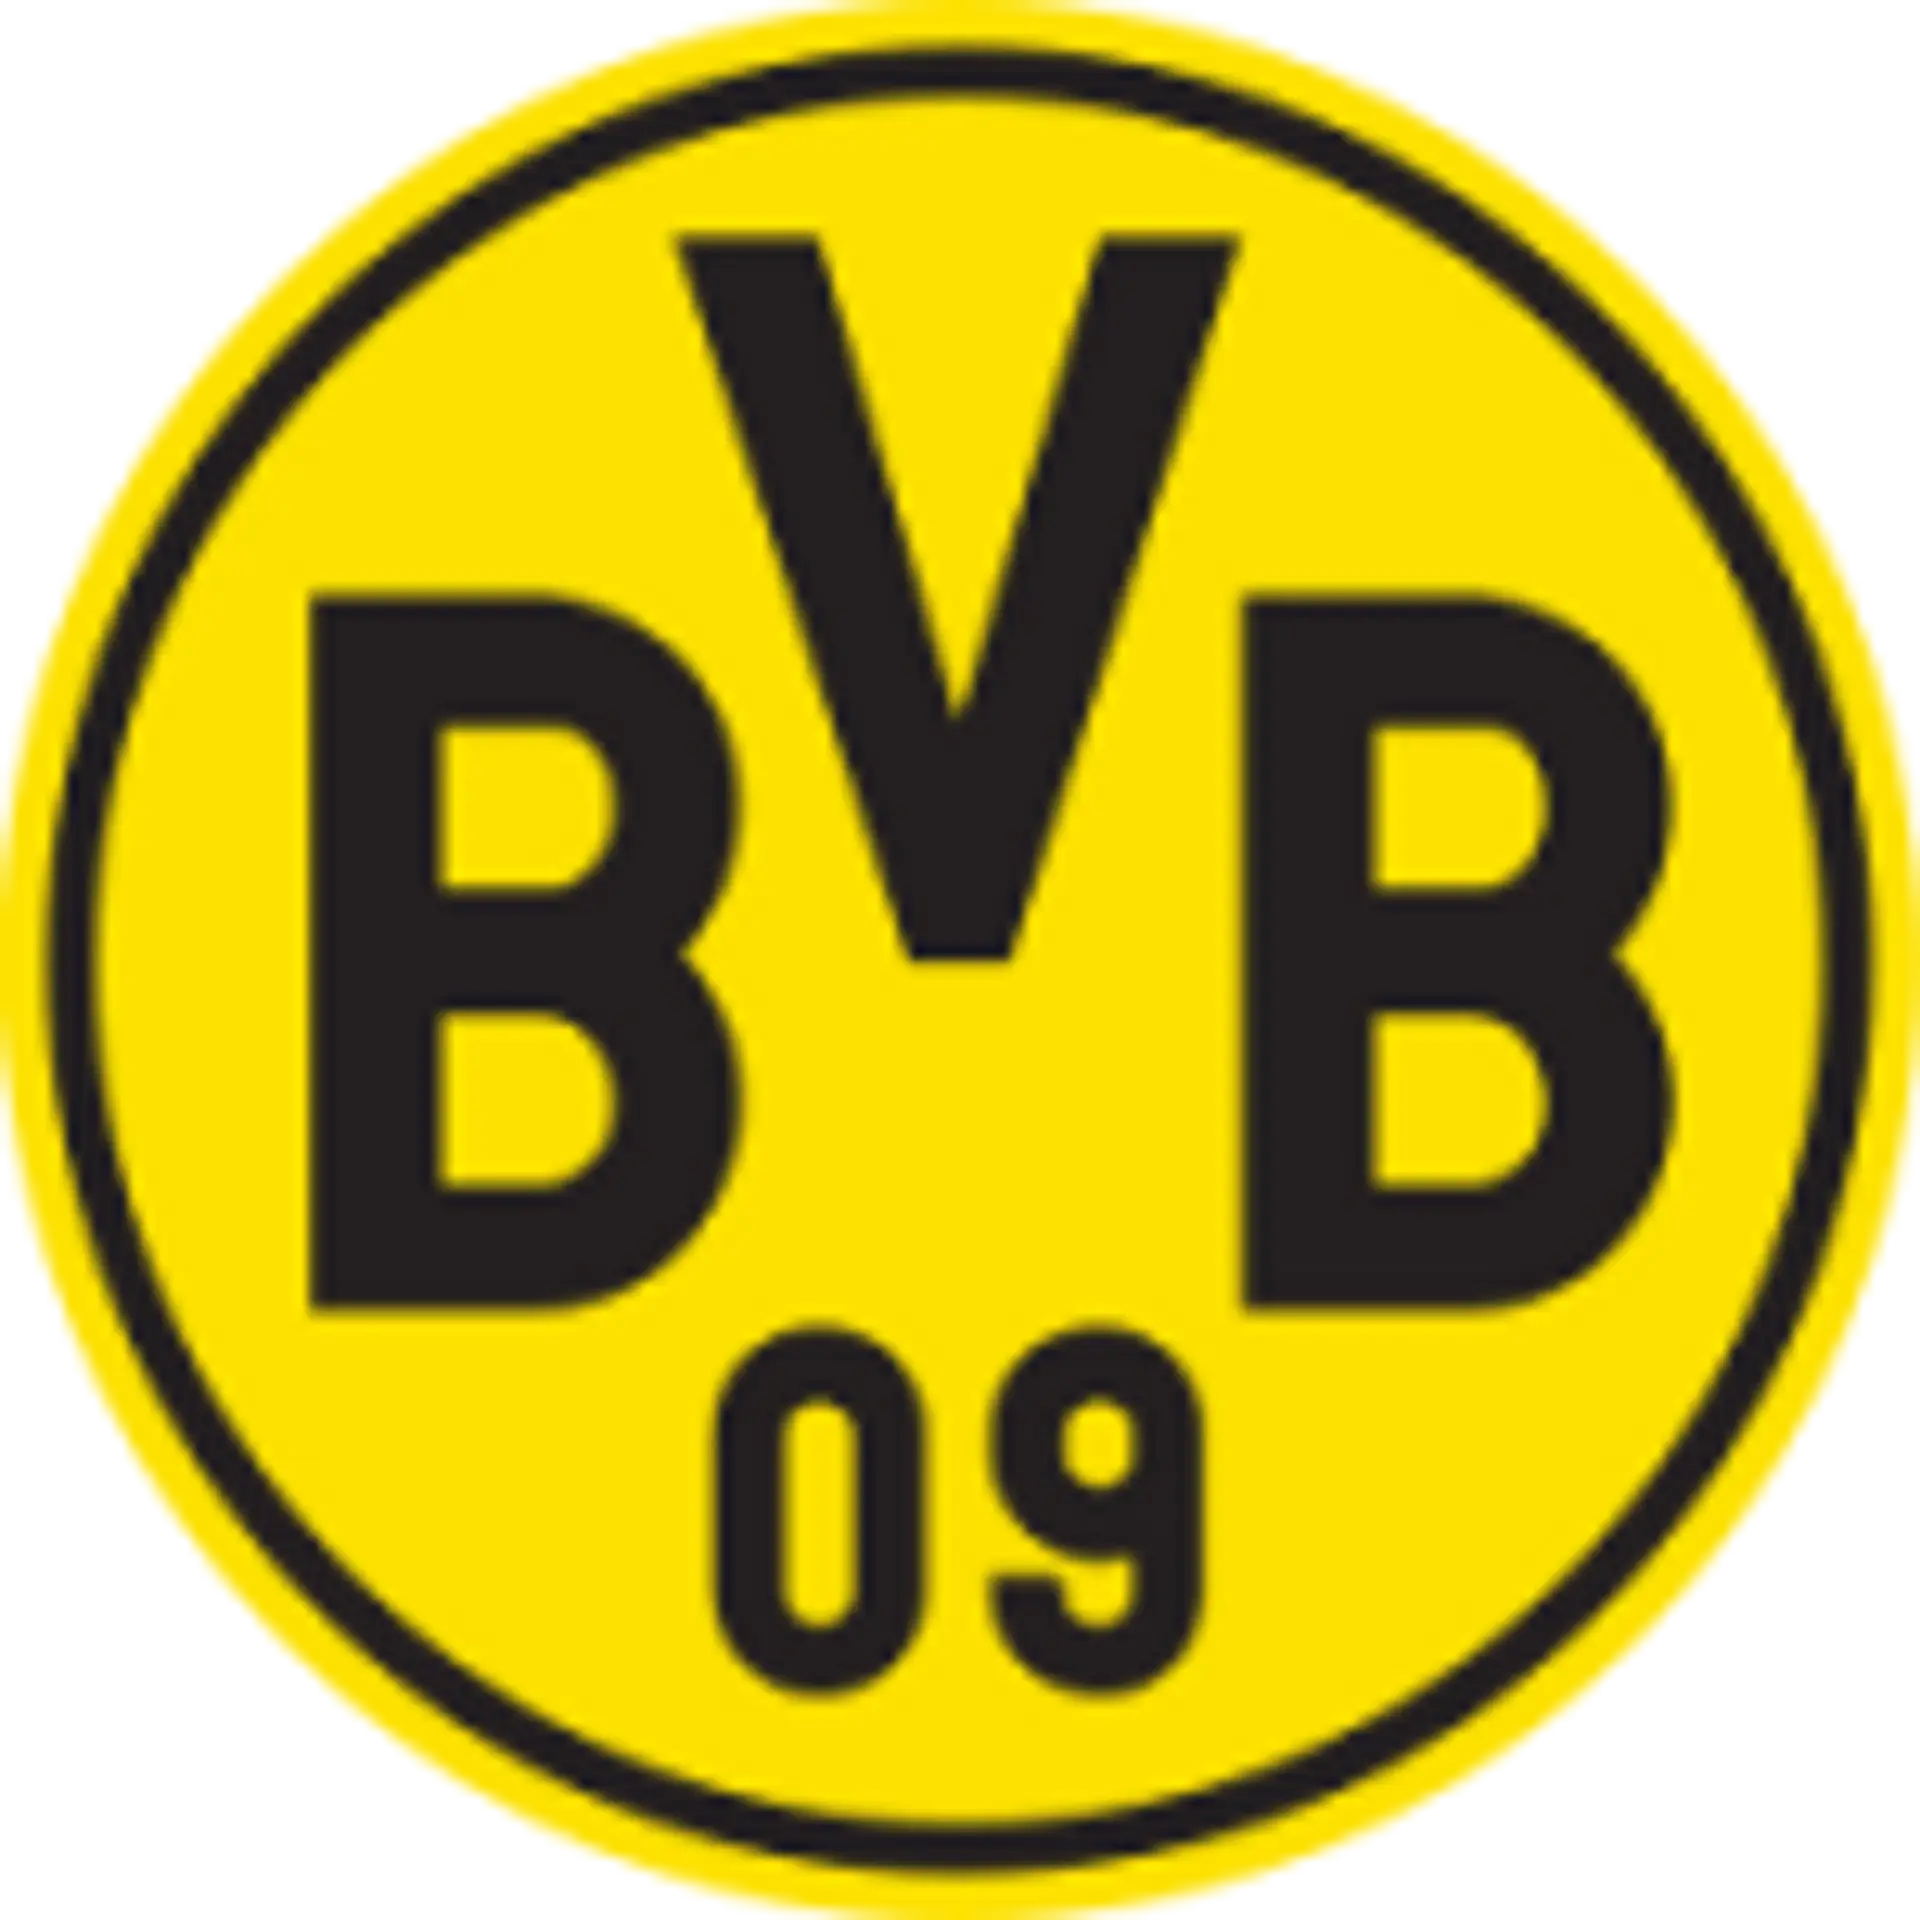 BVB-U19